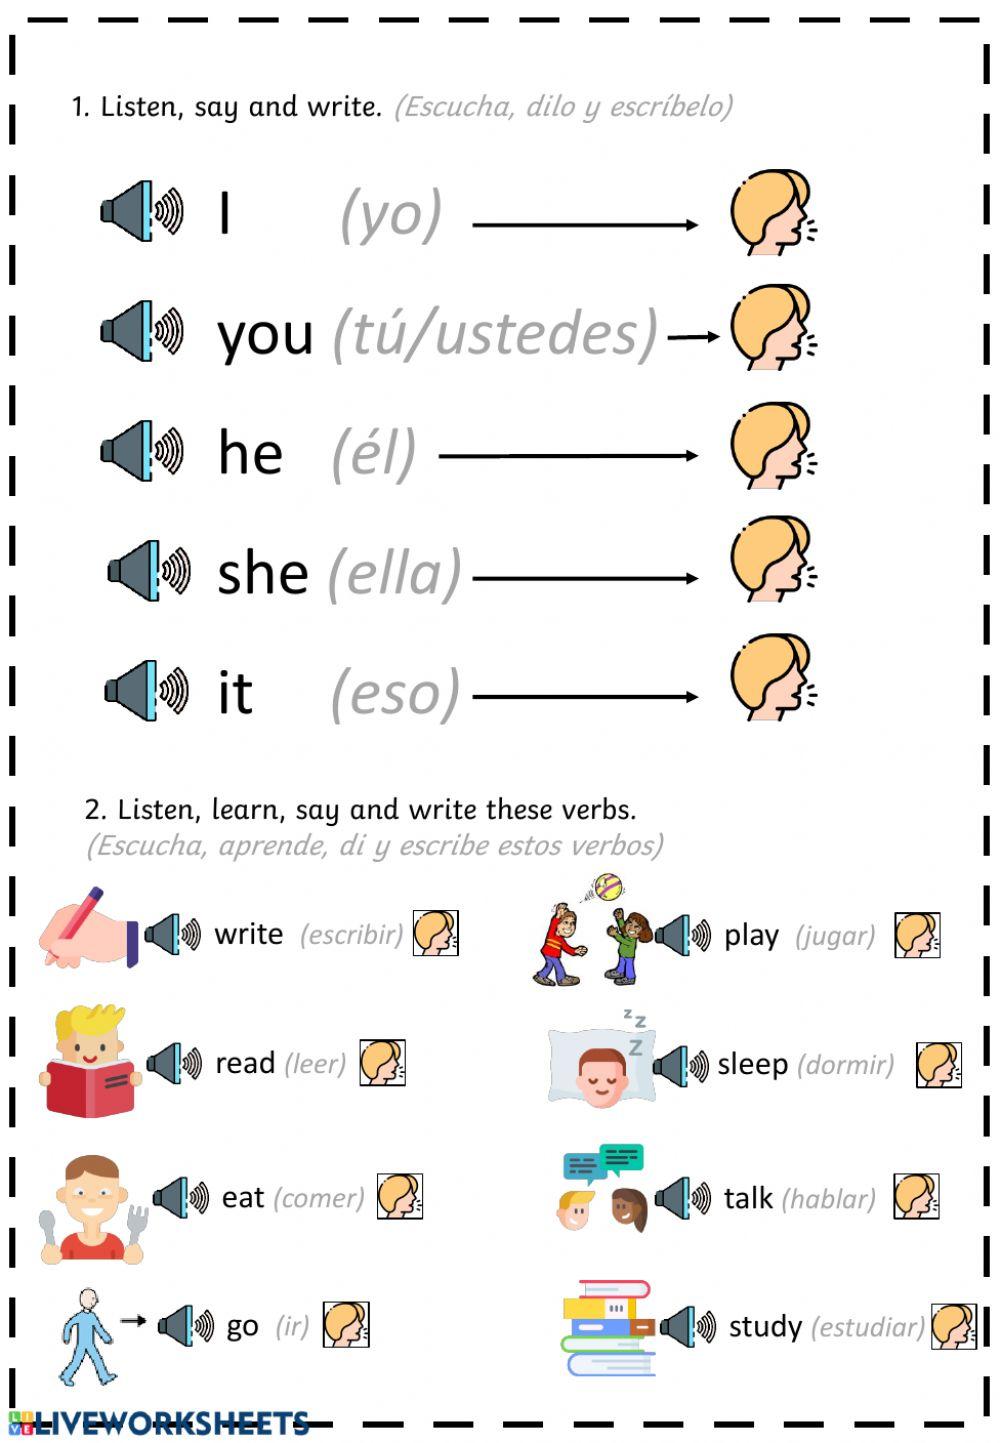 Pronouns and basic verbs